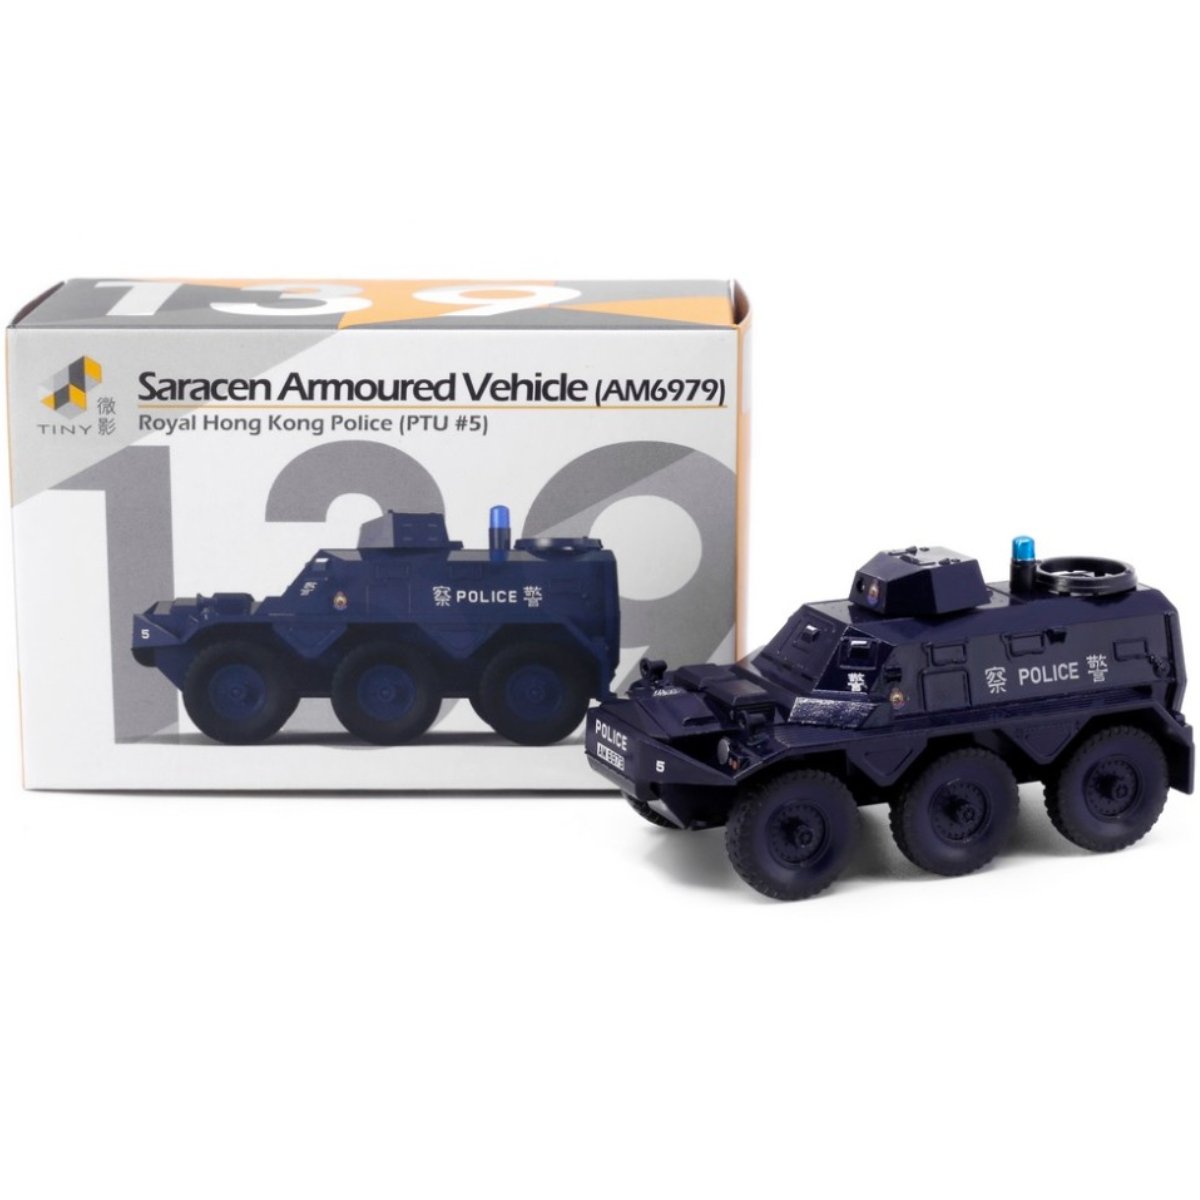 Tiny Models Saracen APC Armoured Vehicle - Royal Hong Kong Police (1:72 Scale) - Phillips Hobbies